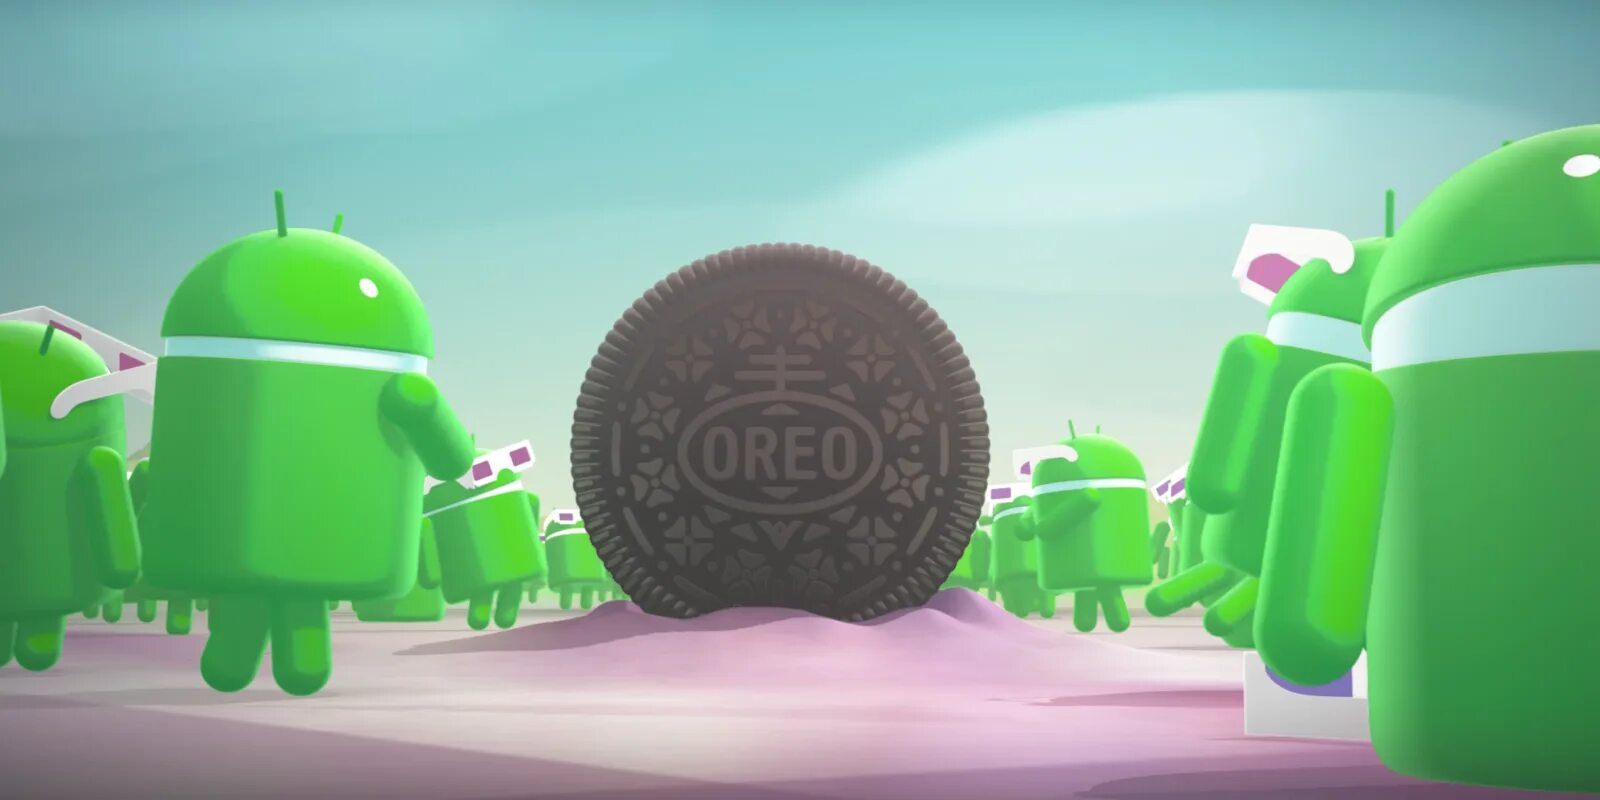 Версия андроид 8 игра. Андроид 8 Oreo. Android 8.0. Google Android 8.0 Oreo. Андроид 8.1.